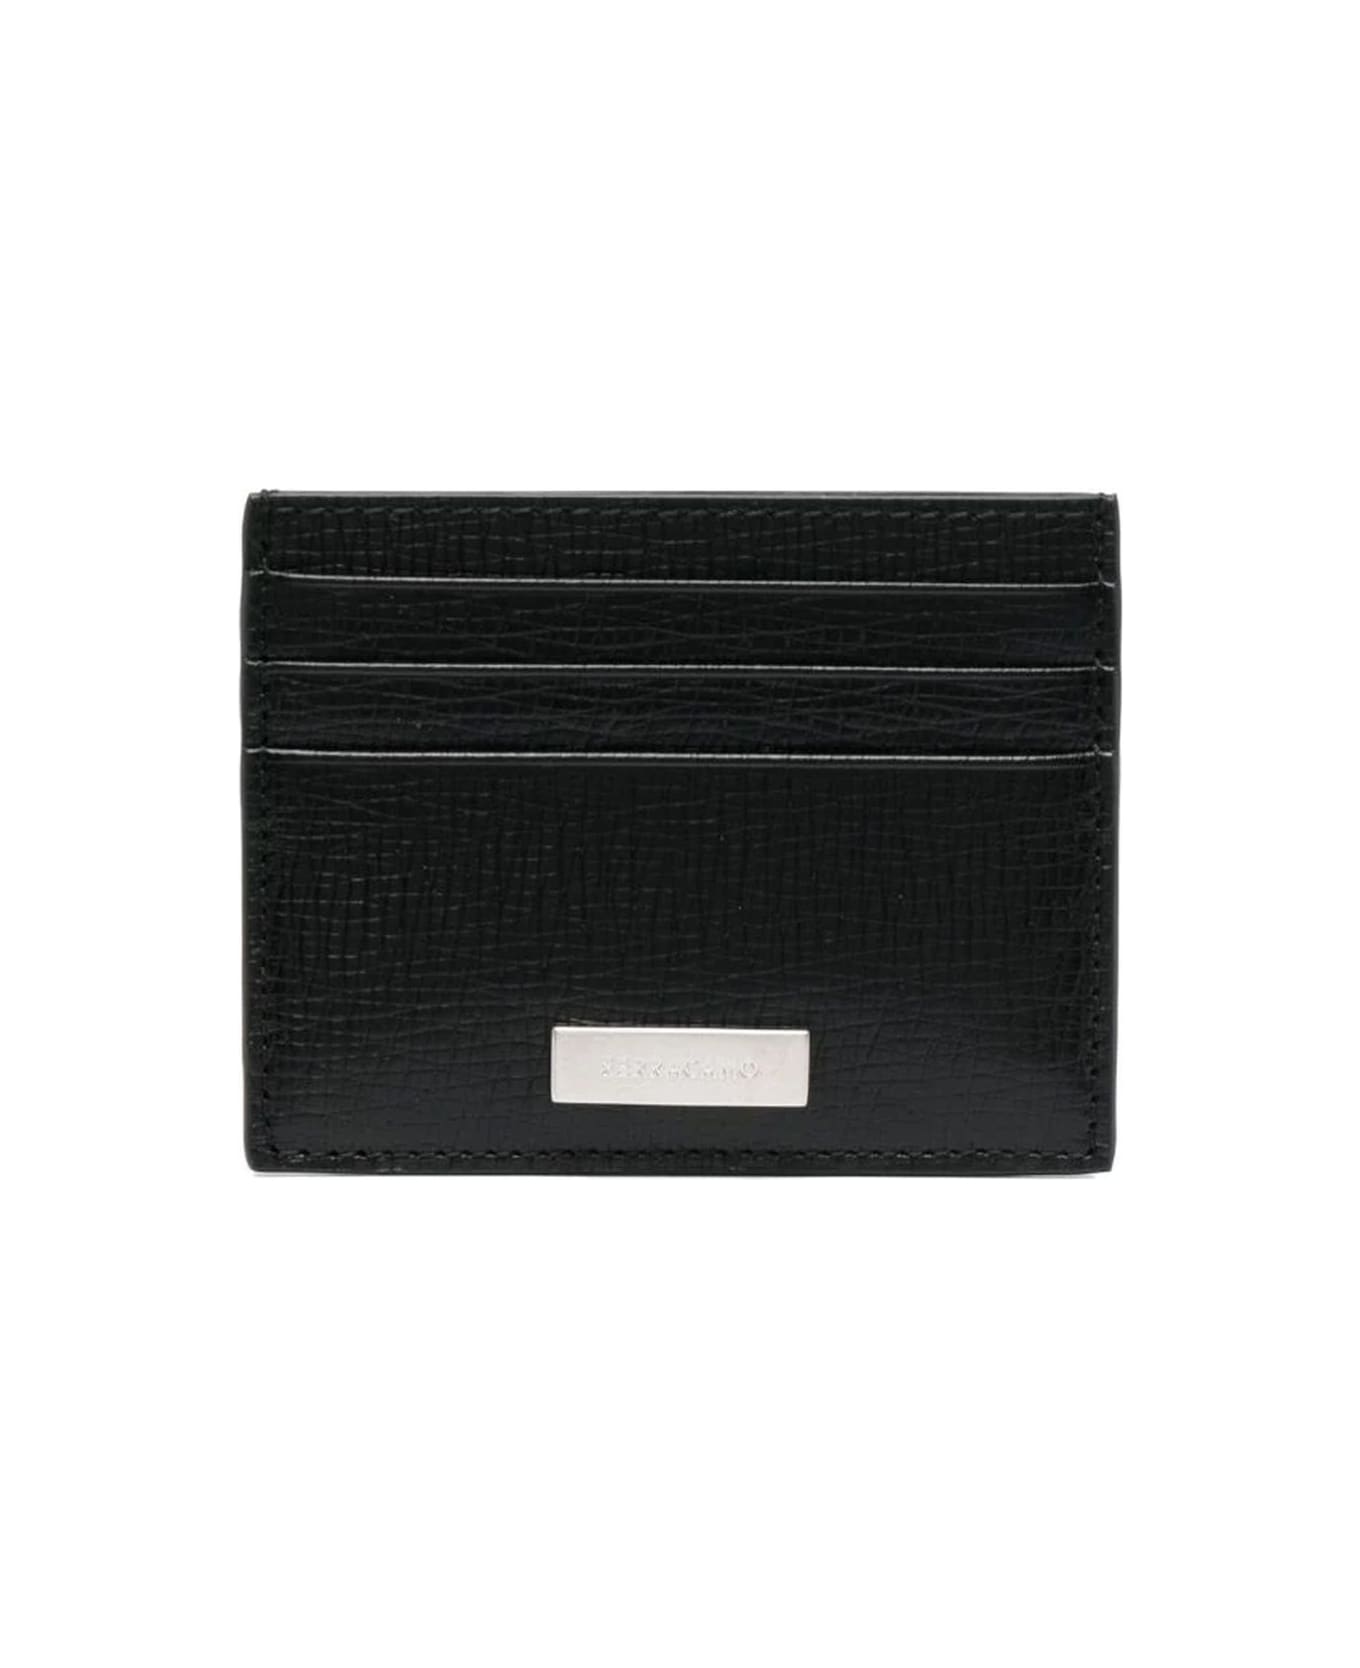 Ferragamo Black Calf Leather Wallet - Black 財布